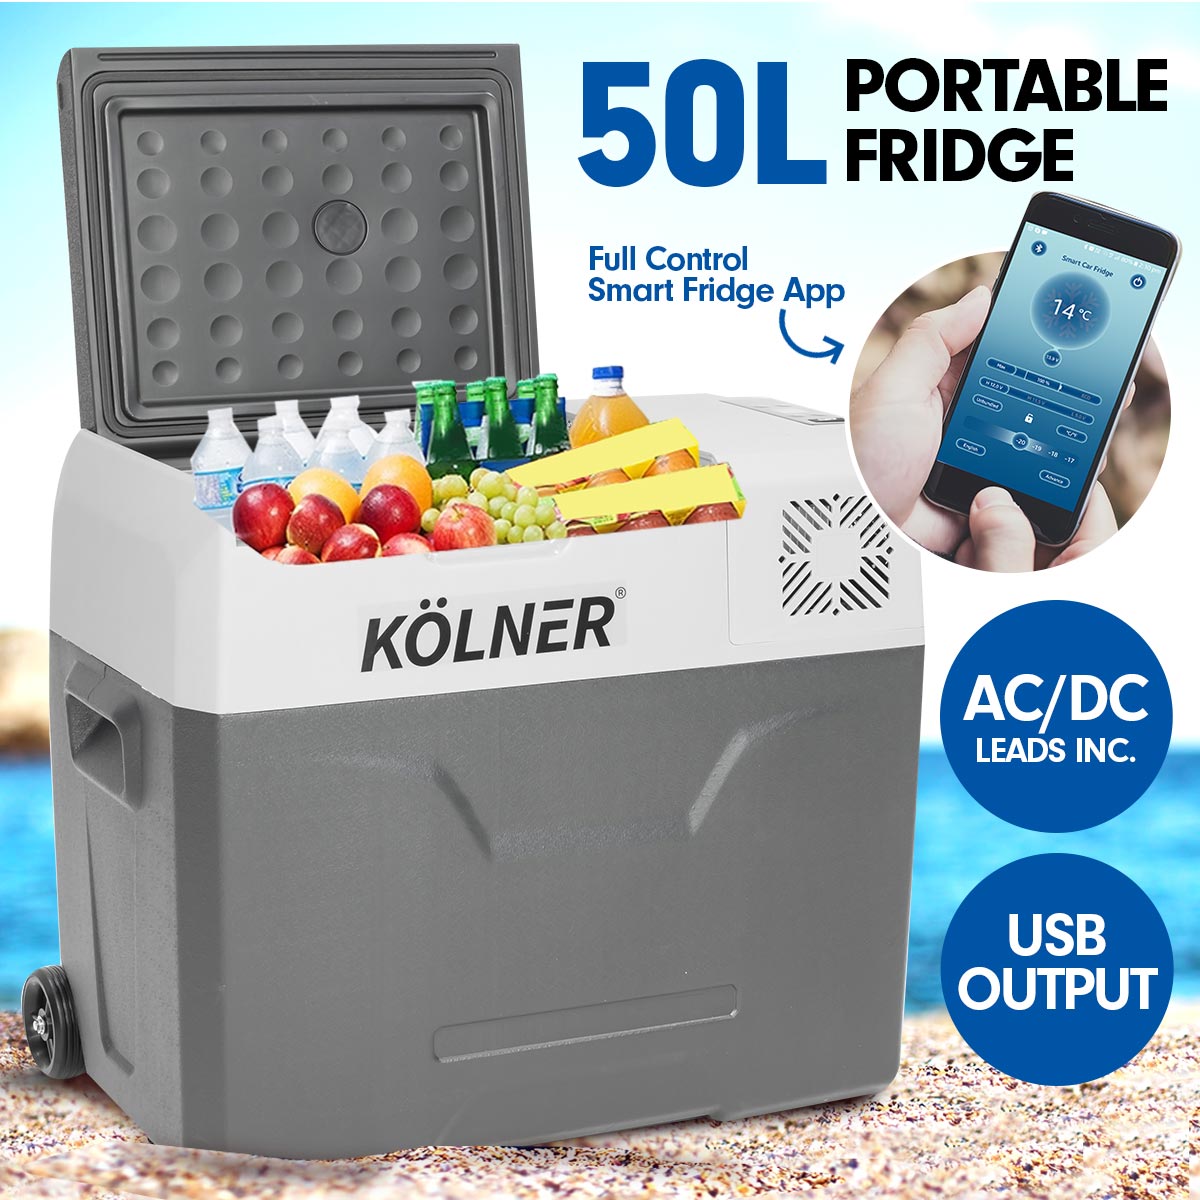 Kolner 50L Portable Fridge Cooler Freezer Camping Food Storage with Smart Fridge App